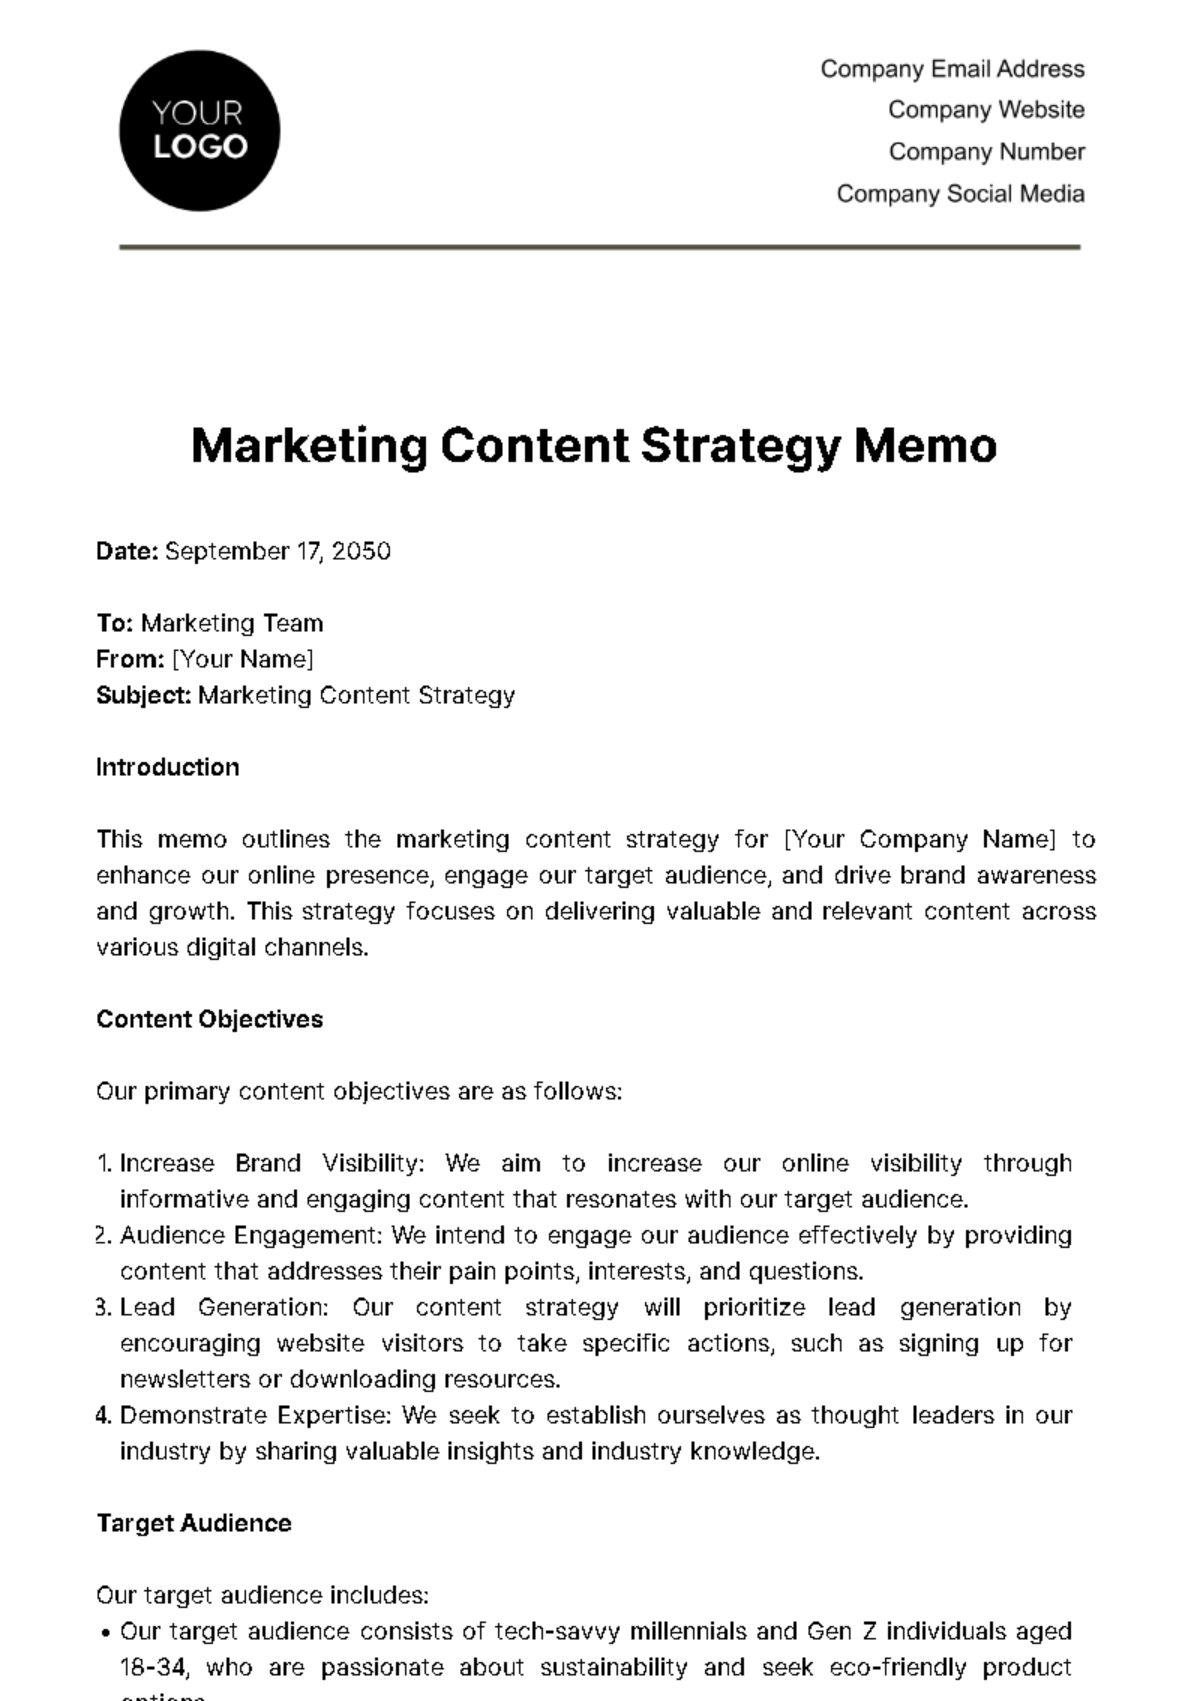 Free Social Media Marketing Strategy Memo Template